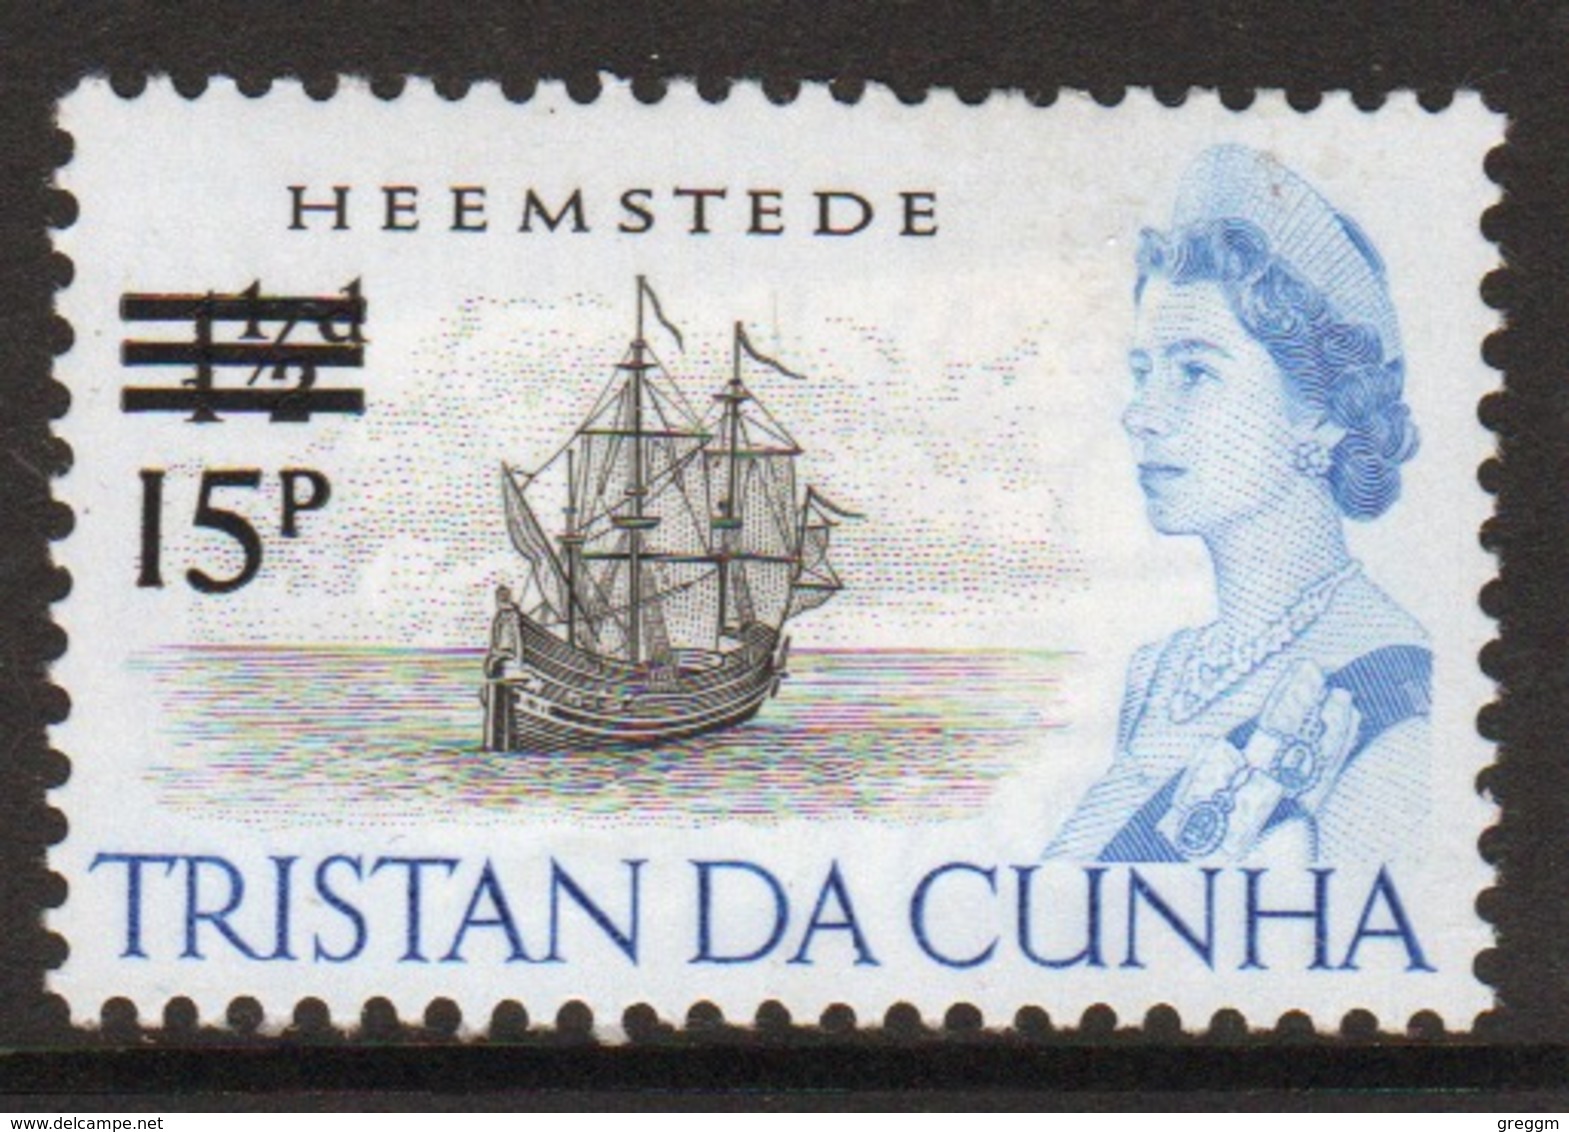 Tristan Da Cunha 1971 Single 15p Definitive Stamp From The 65 Ship Series Overprinted For Decimal. - Tristan Da Cunha